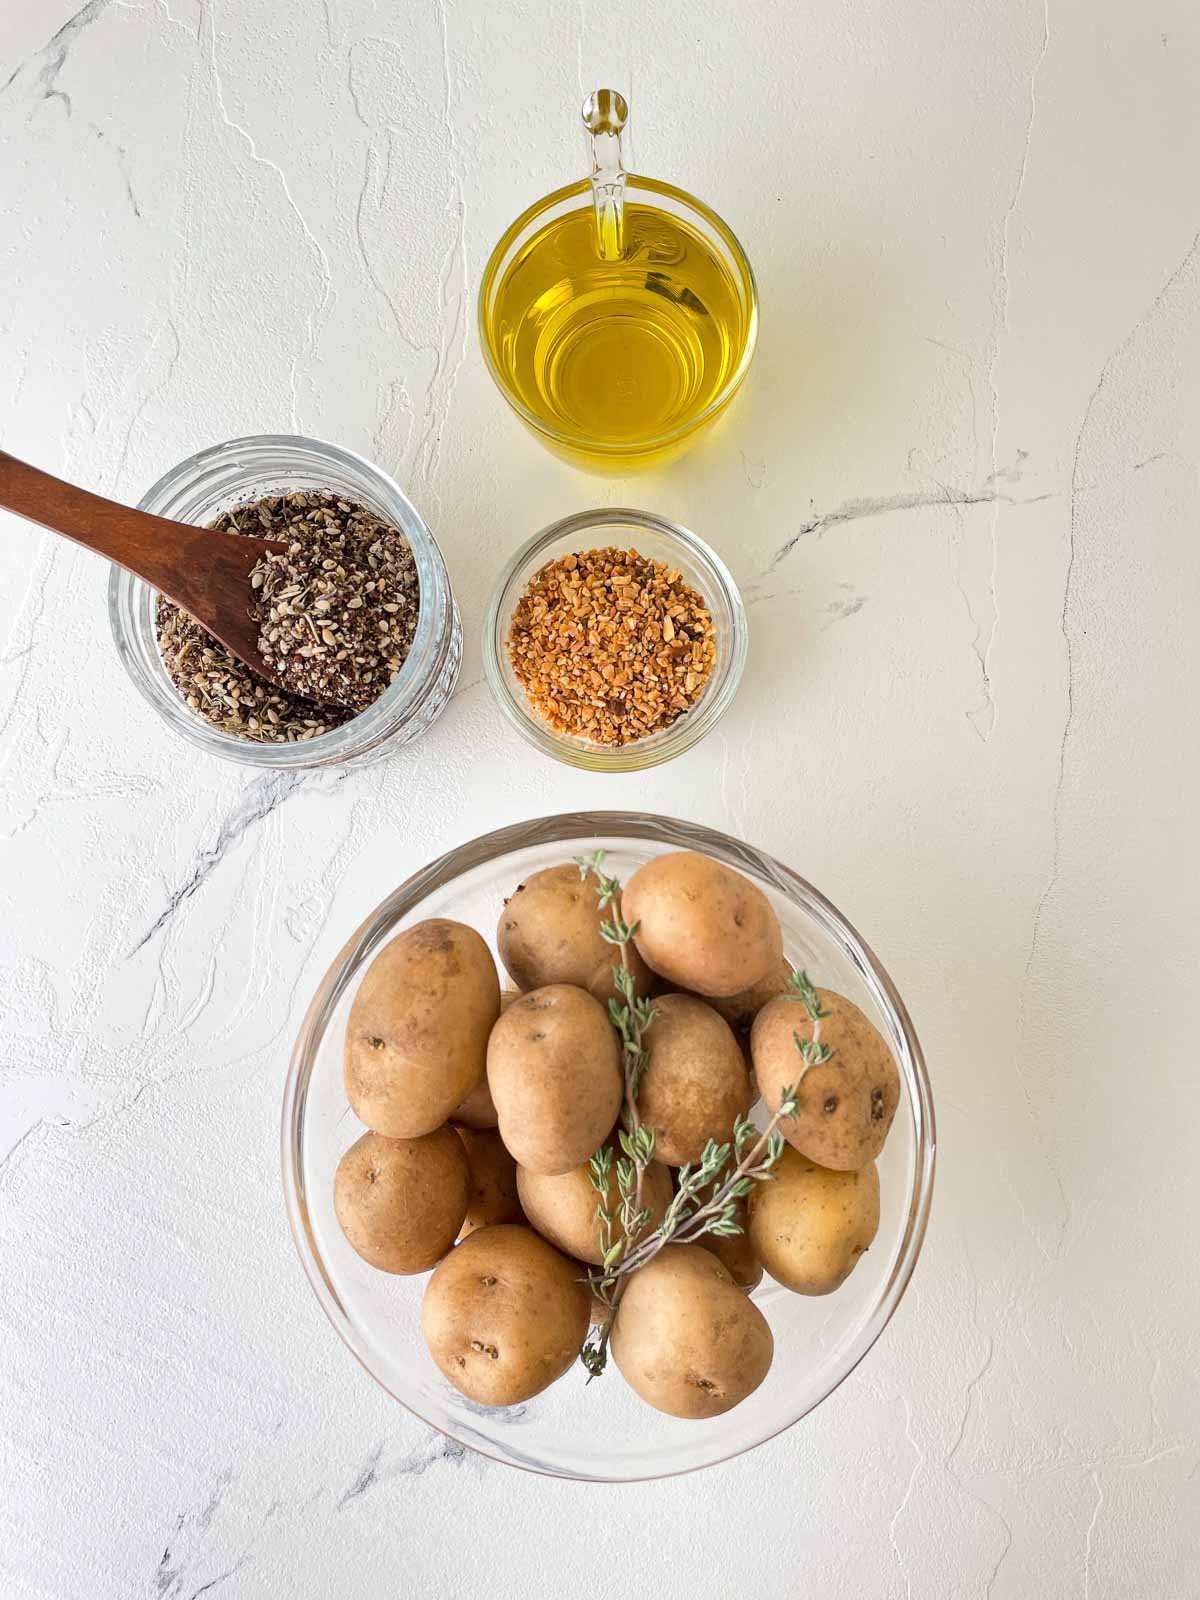 Ingredients to make za'atar potatoes